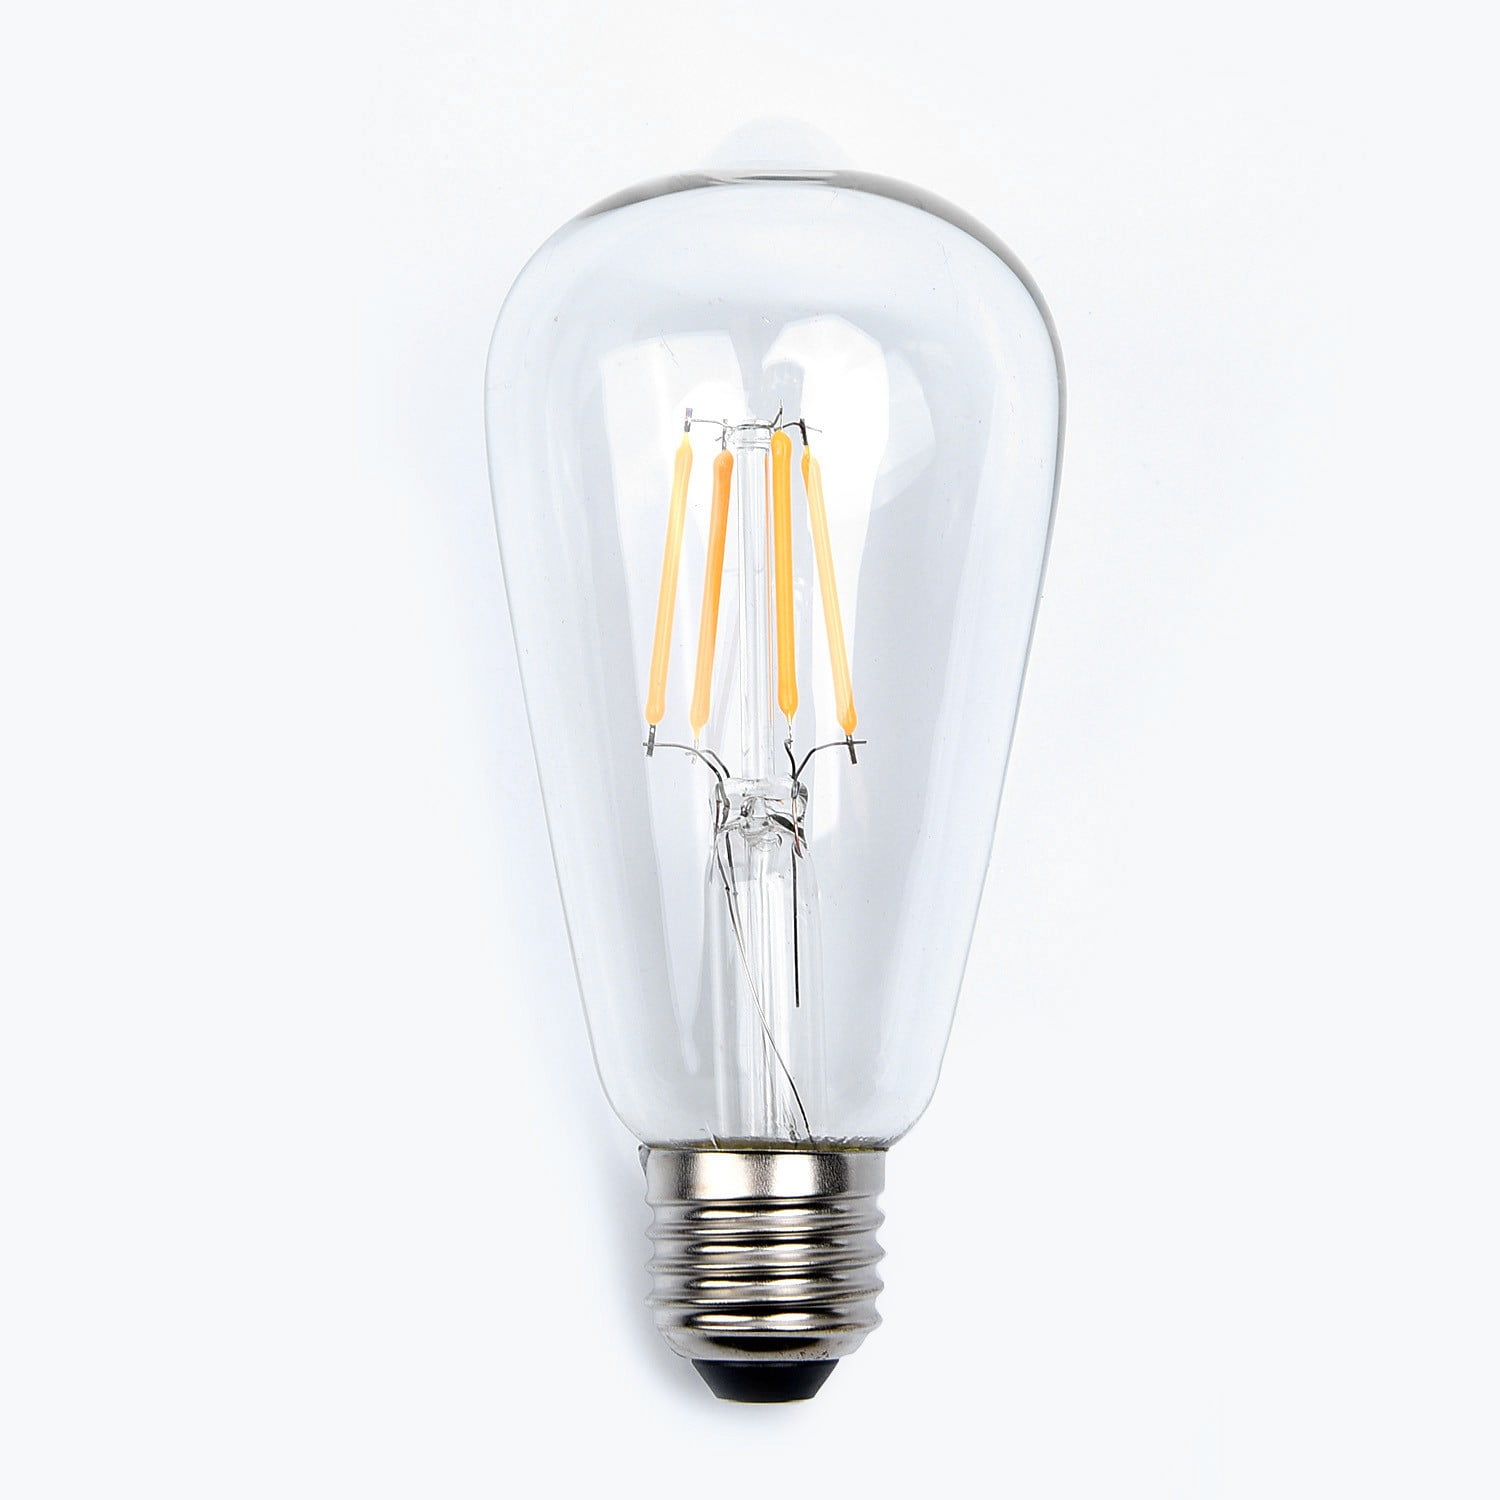 QXKE LED Filament Light Bulb 2W-8W ST64 E27 Vintage Retro Non-Dimmable, White -